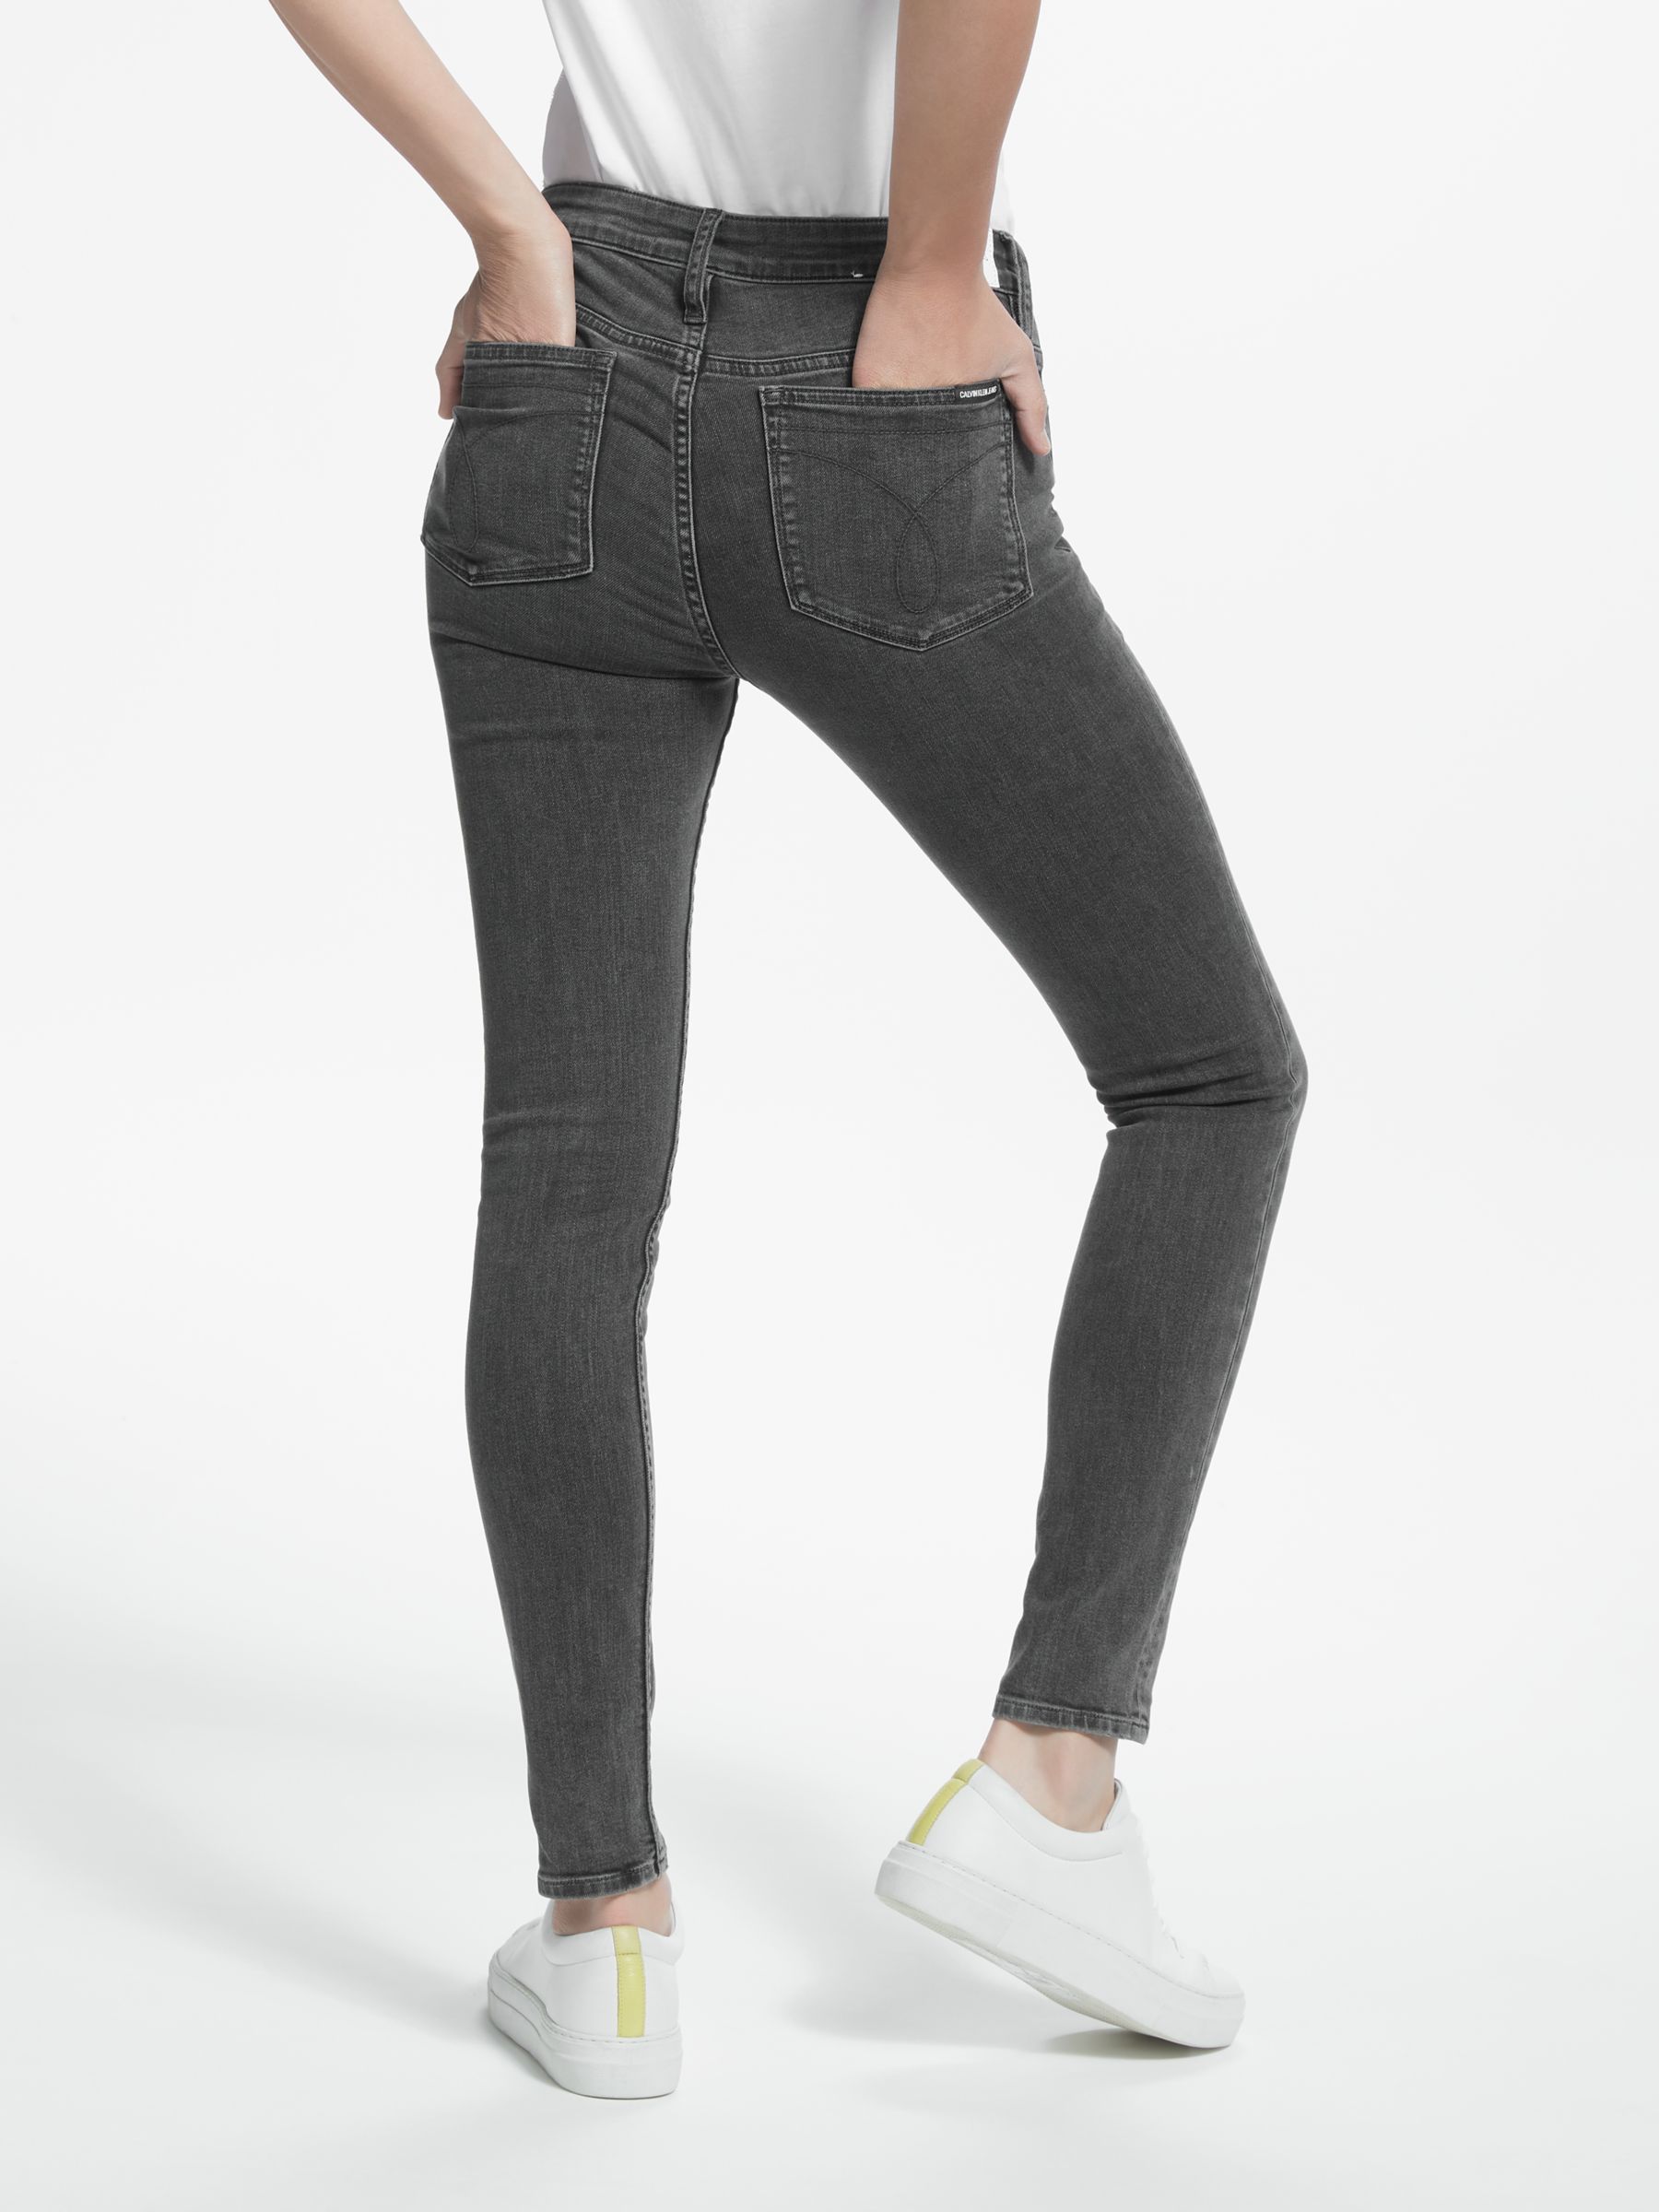 calvin klein super skinny jeans